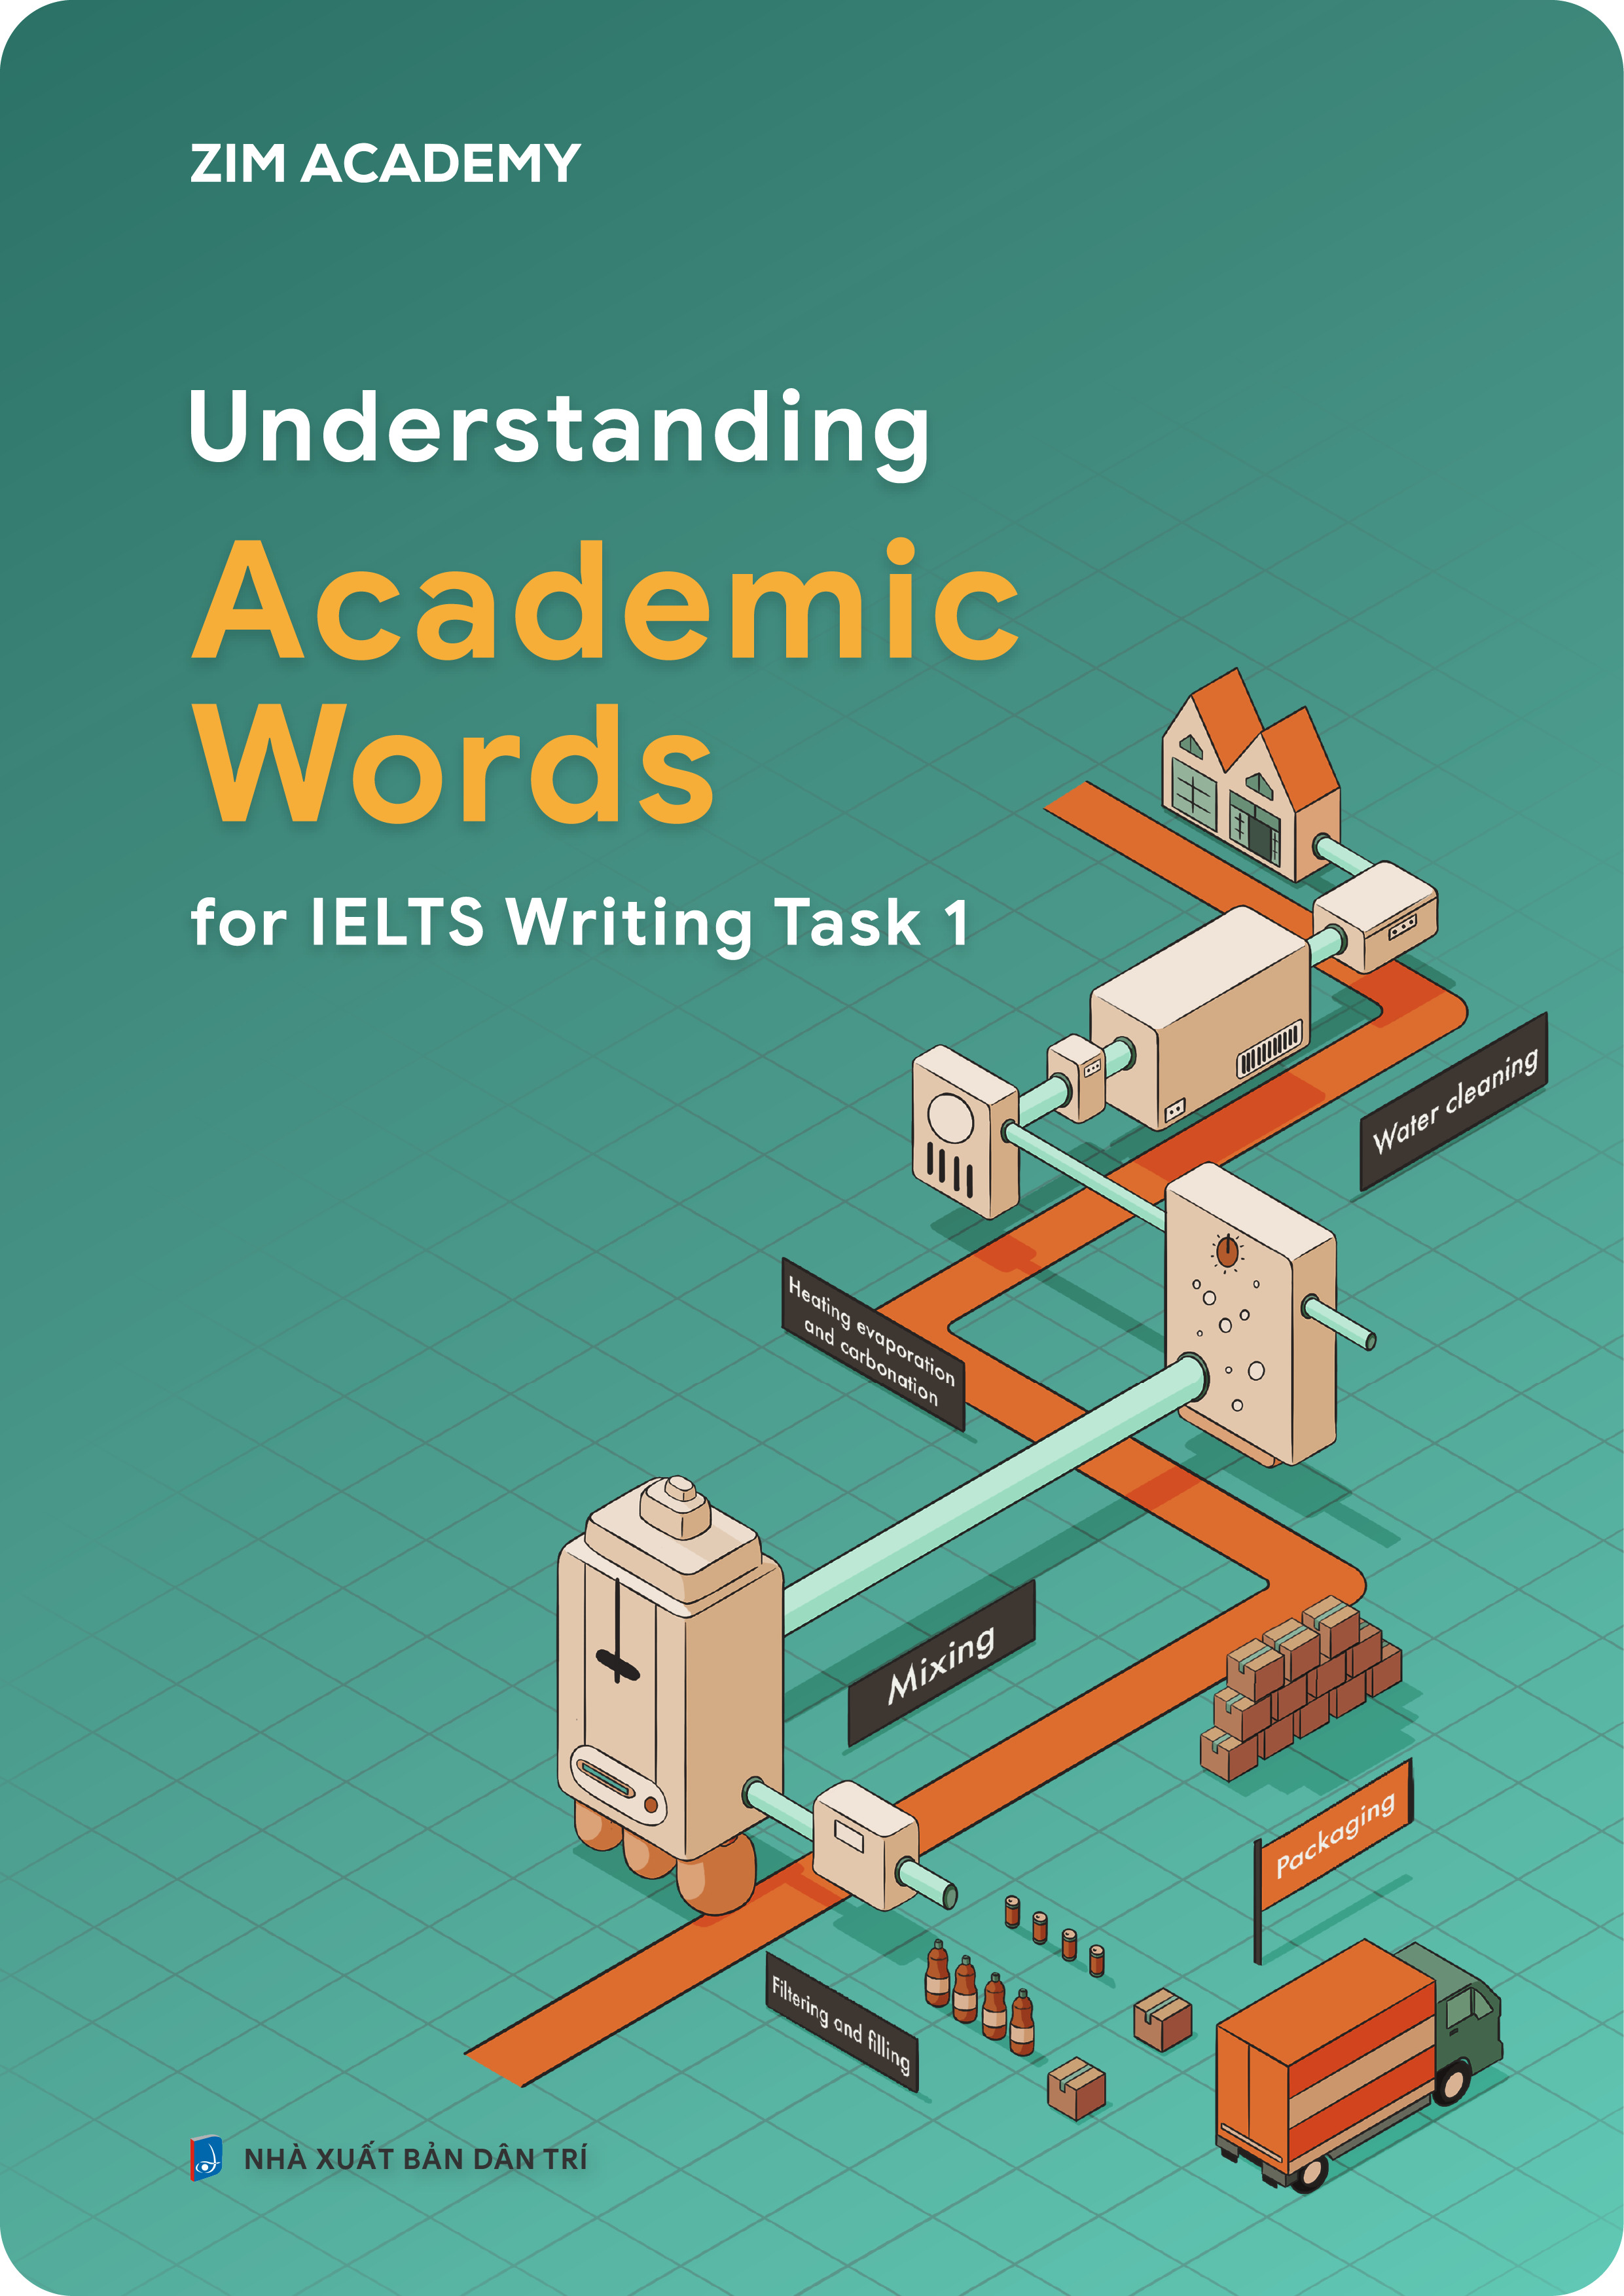 Understanding Academic Words for IELTS Writing Task 1